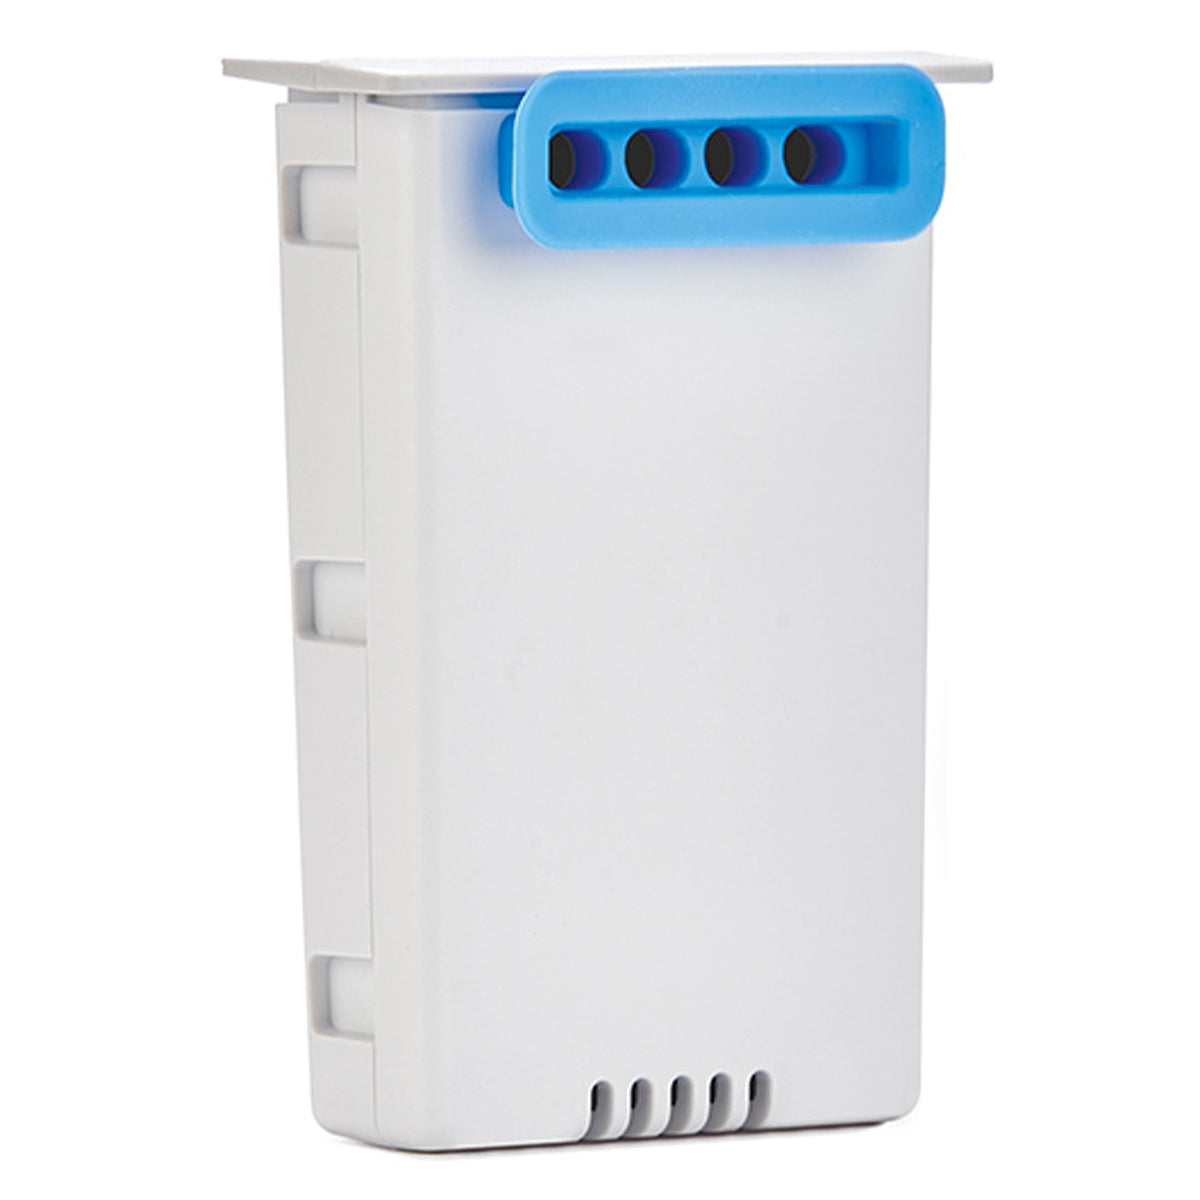 Filter for SoClean 3 CPAP/BiPAP Sanitizers